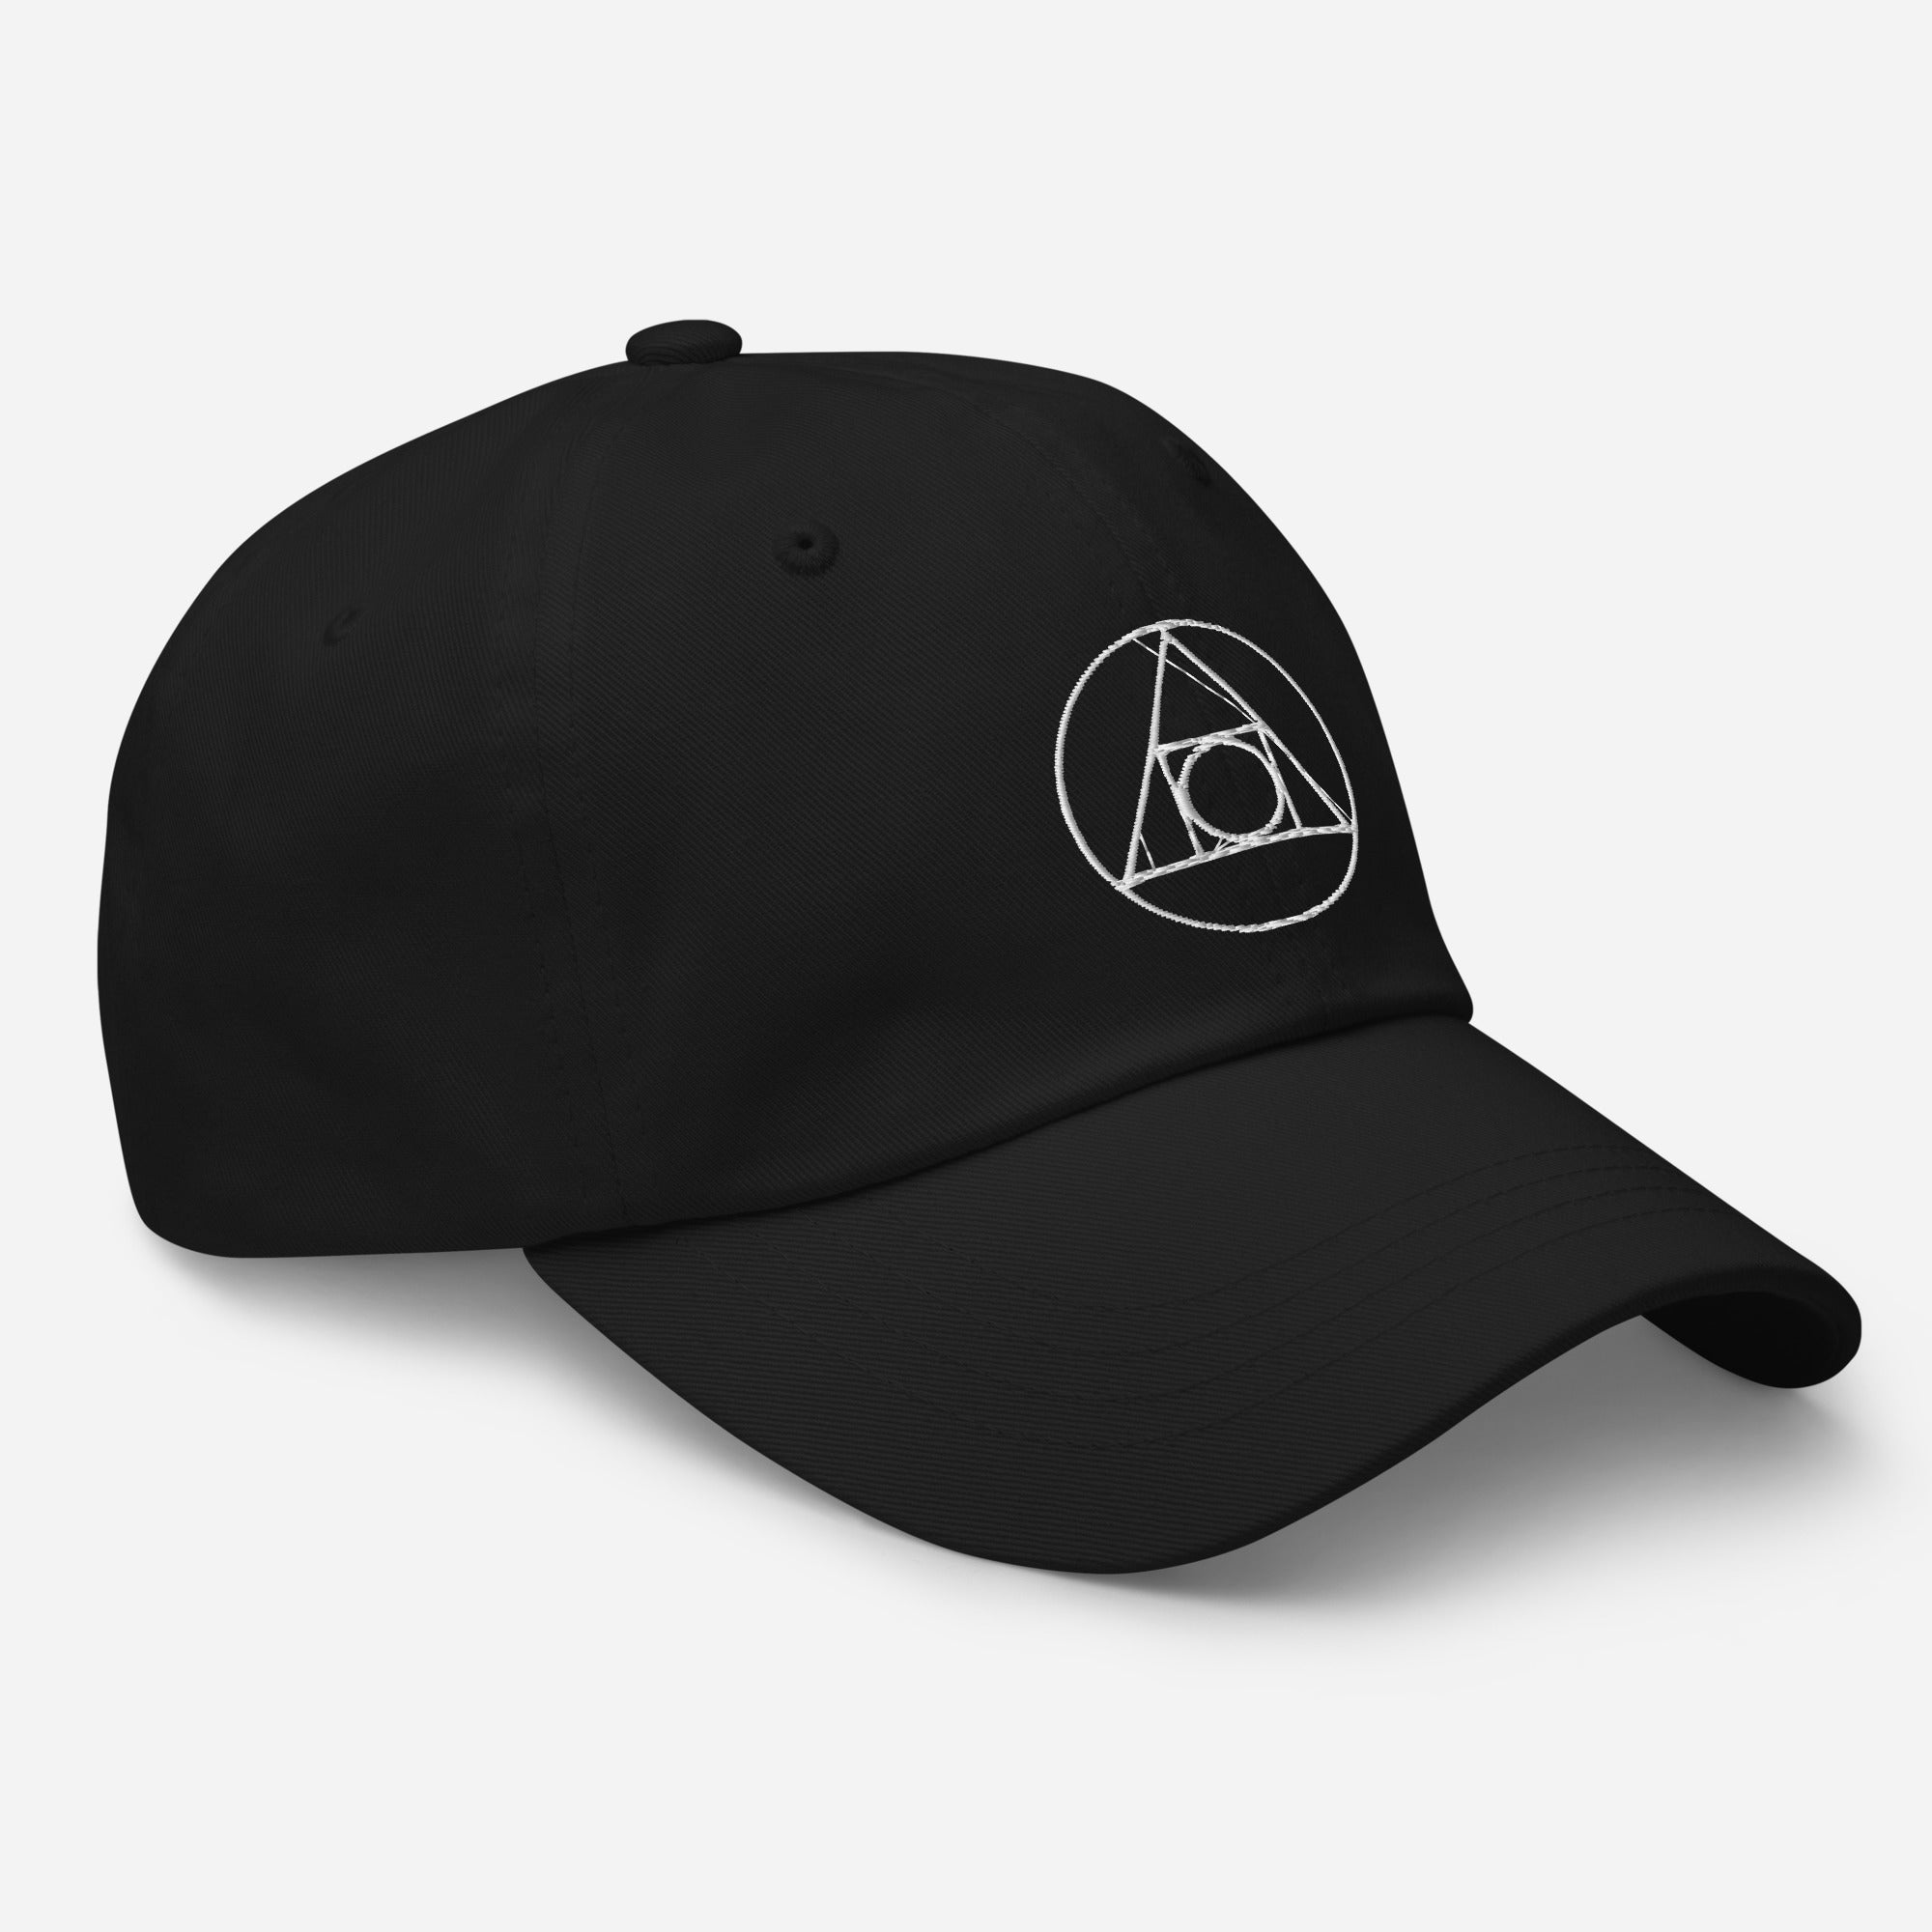 Philosopher's Stone Alchemy Symbol Embroidered Baseball Cap Dad hat